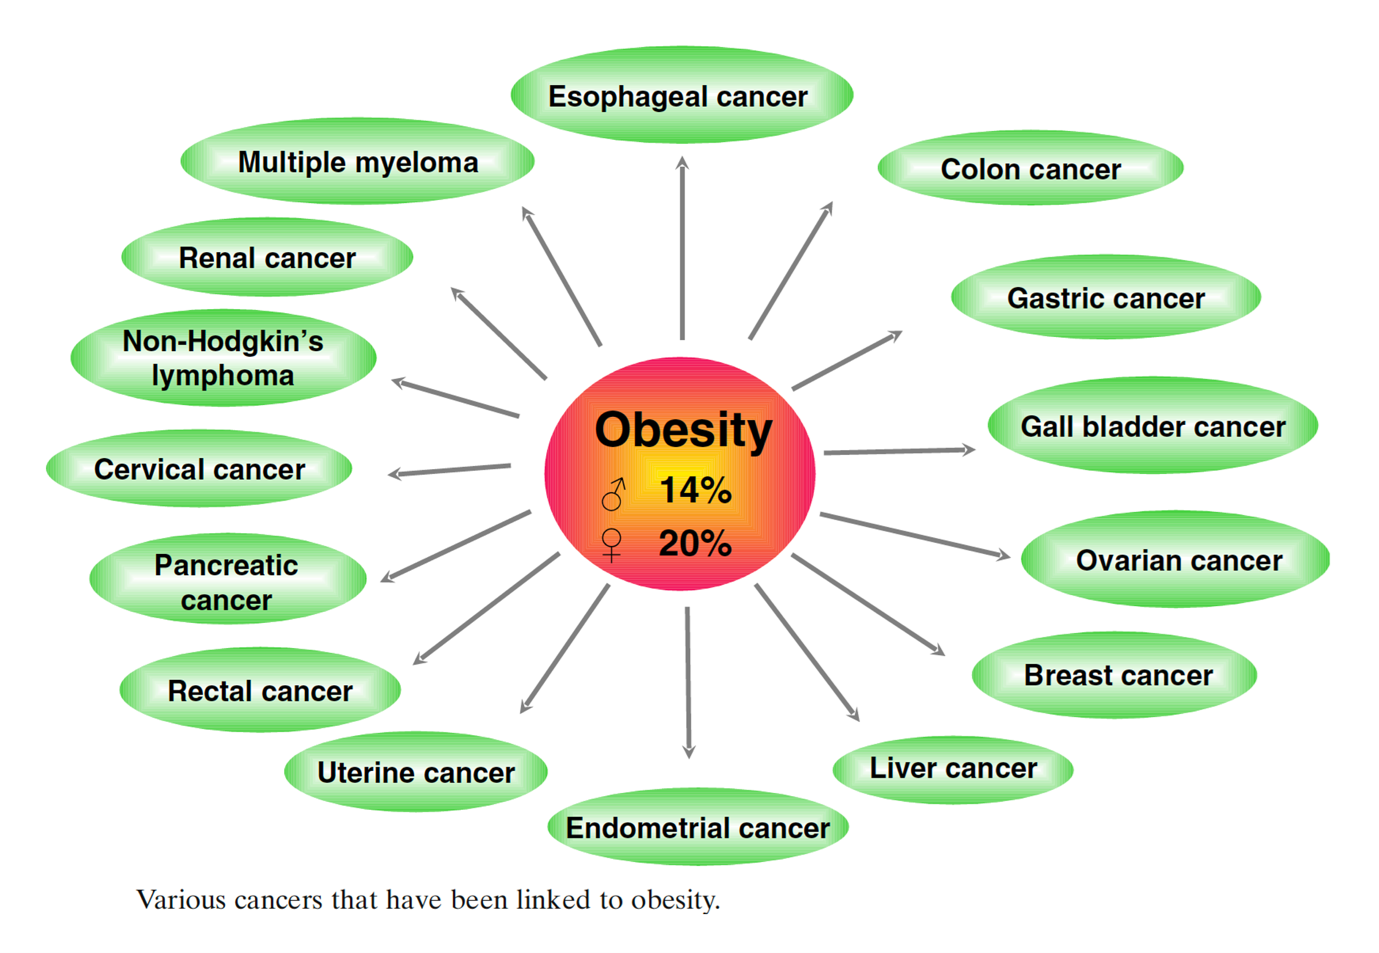 Lifestyle Cancer - Obesity